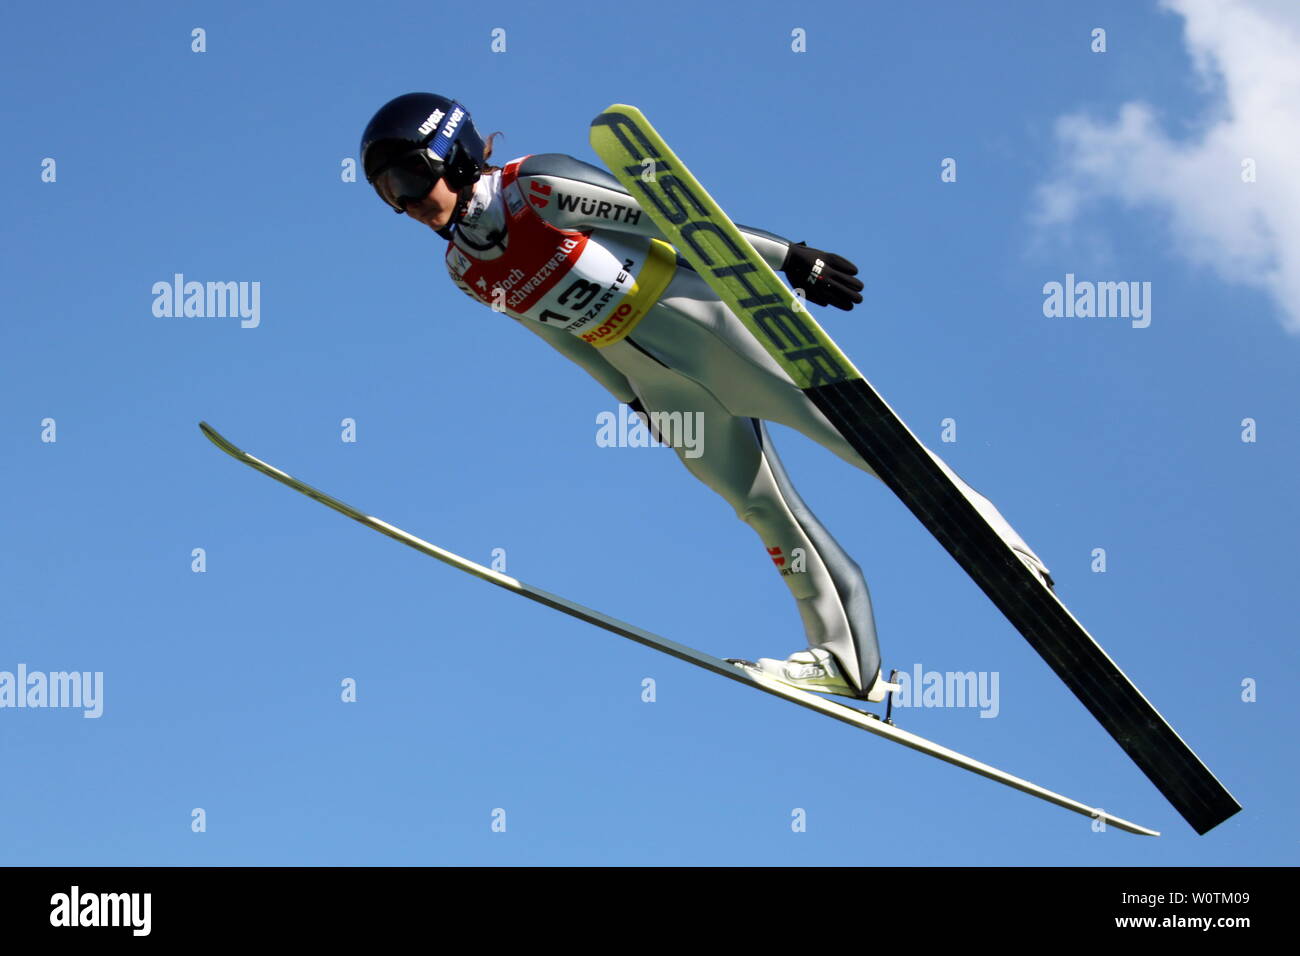 Carina Vogt (SC) bei der Skisprung Degenfeld DM Einzel Hinterzarten 2018 Foto de stock